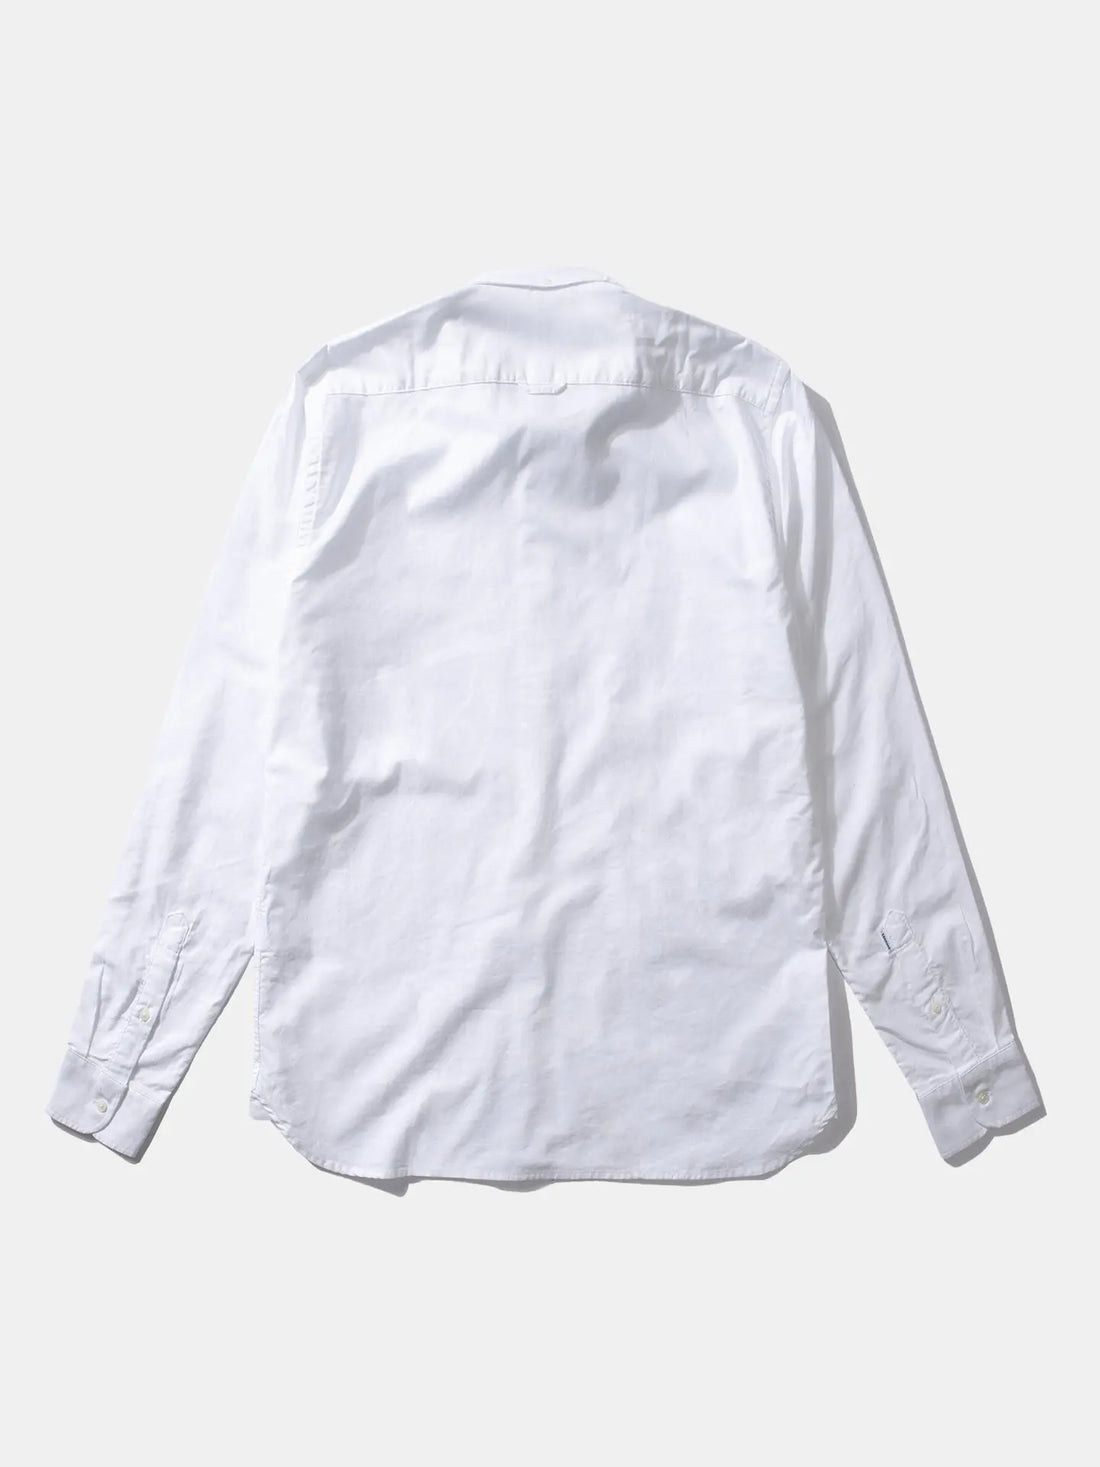 BD Shirt Duck Patch- Plain White - Eames NW